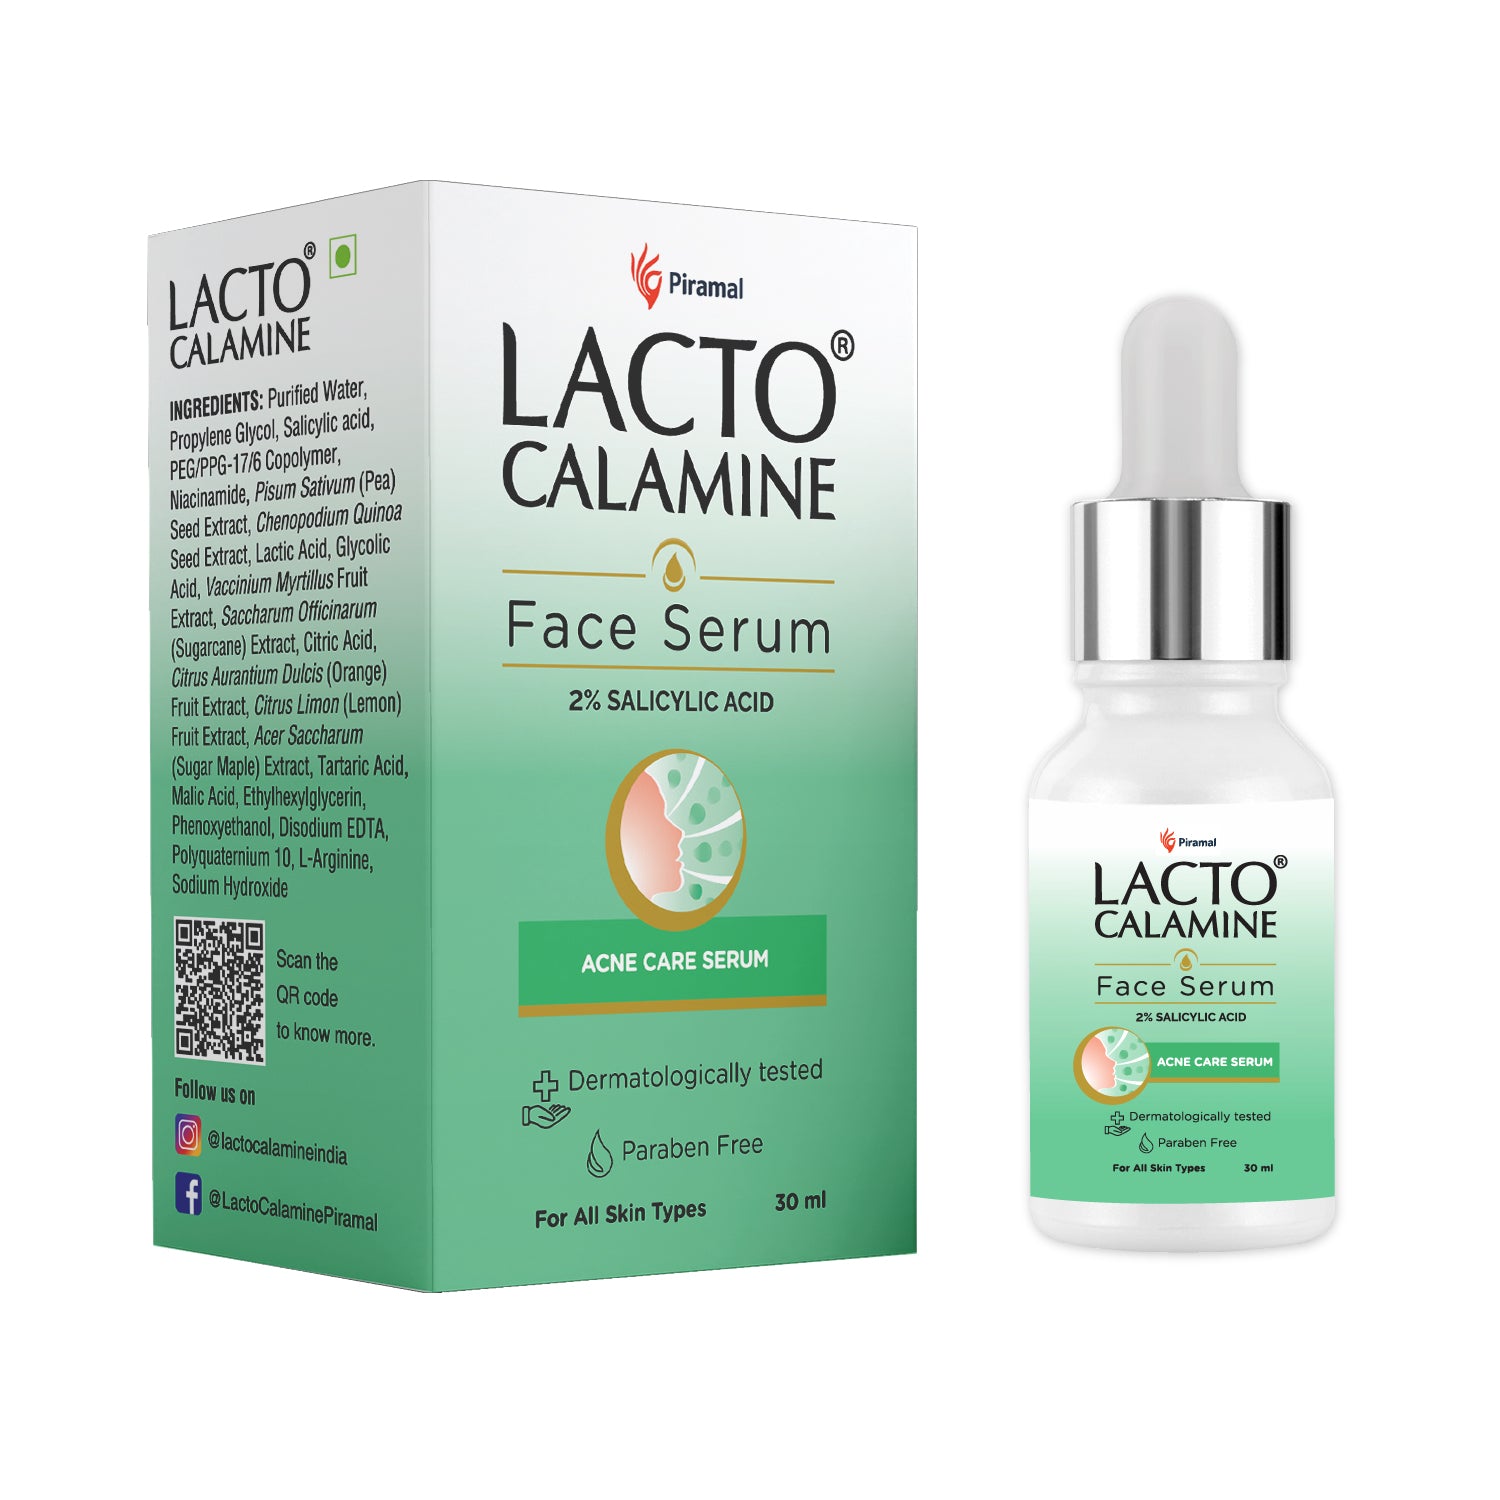 Lacto Calamine 2% Salicylic acid face serum| Acne Care & reduces acne marks